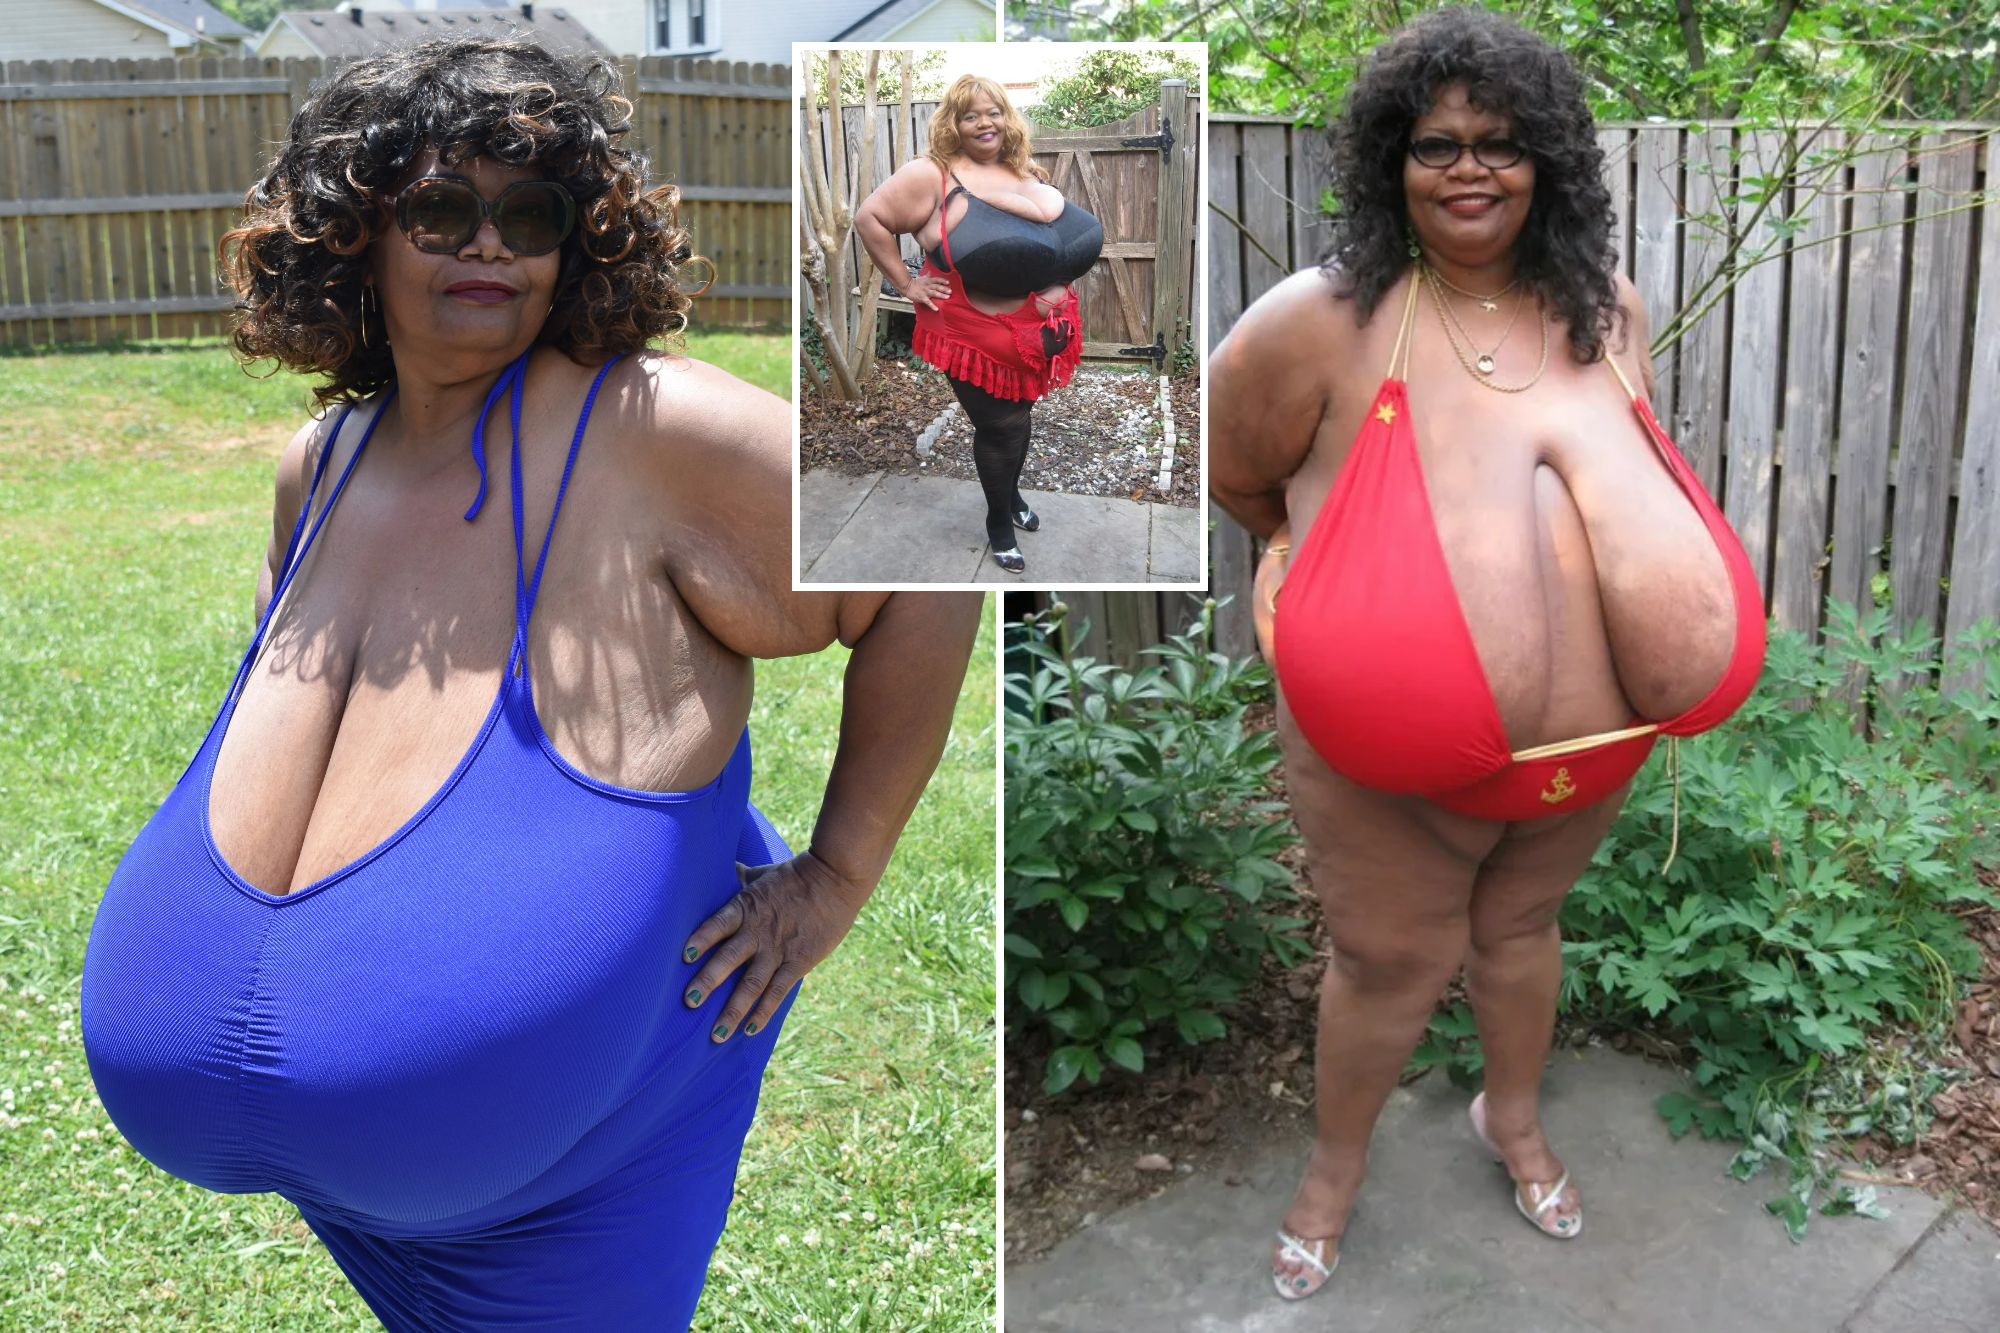 bruce kaufman share huge and heavy tits photos